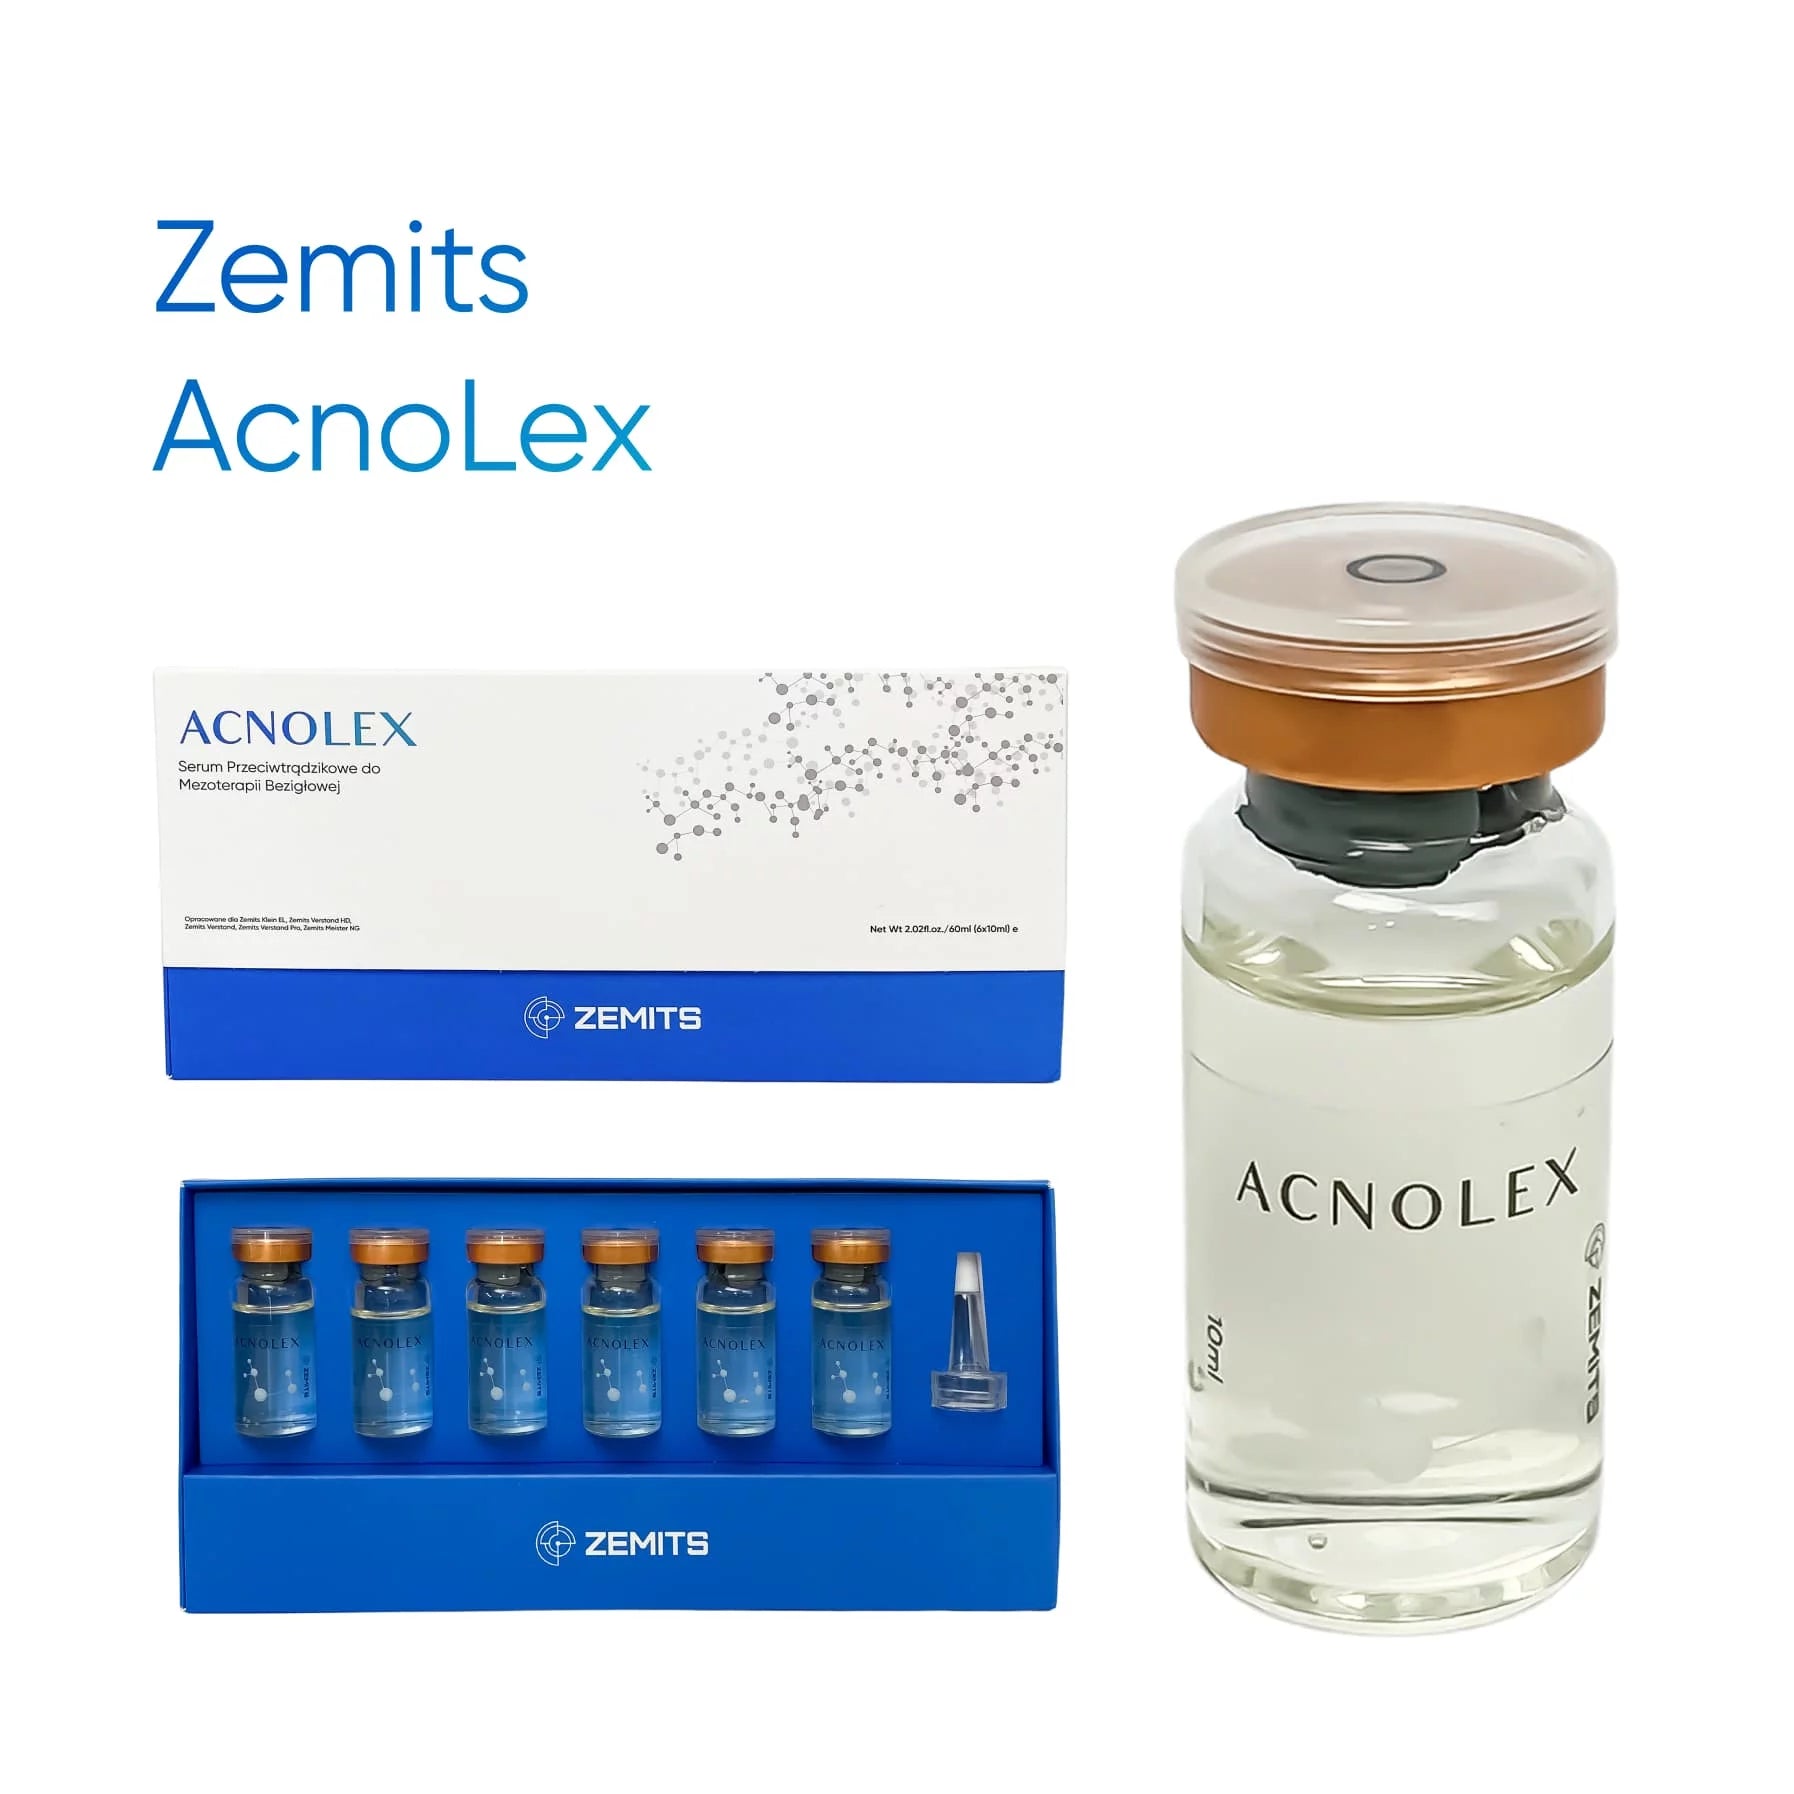 Zemits Acnolex